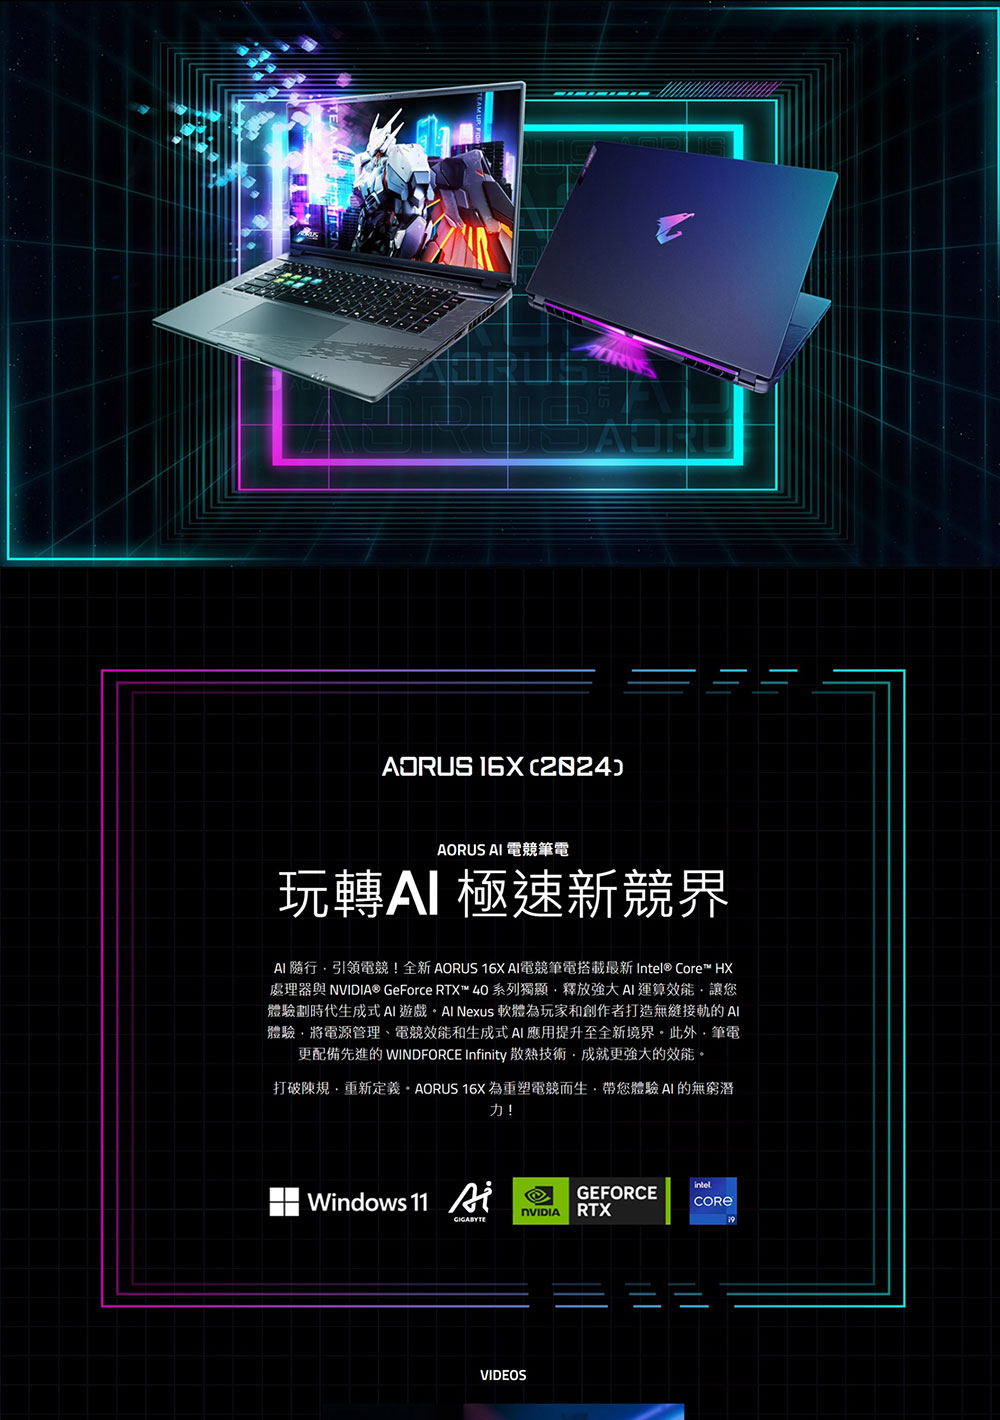 GIGABYTE 技嘉 16吋i7 RTX4070電競筆電(